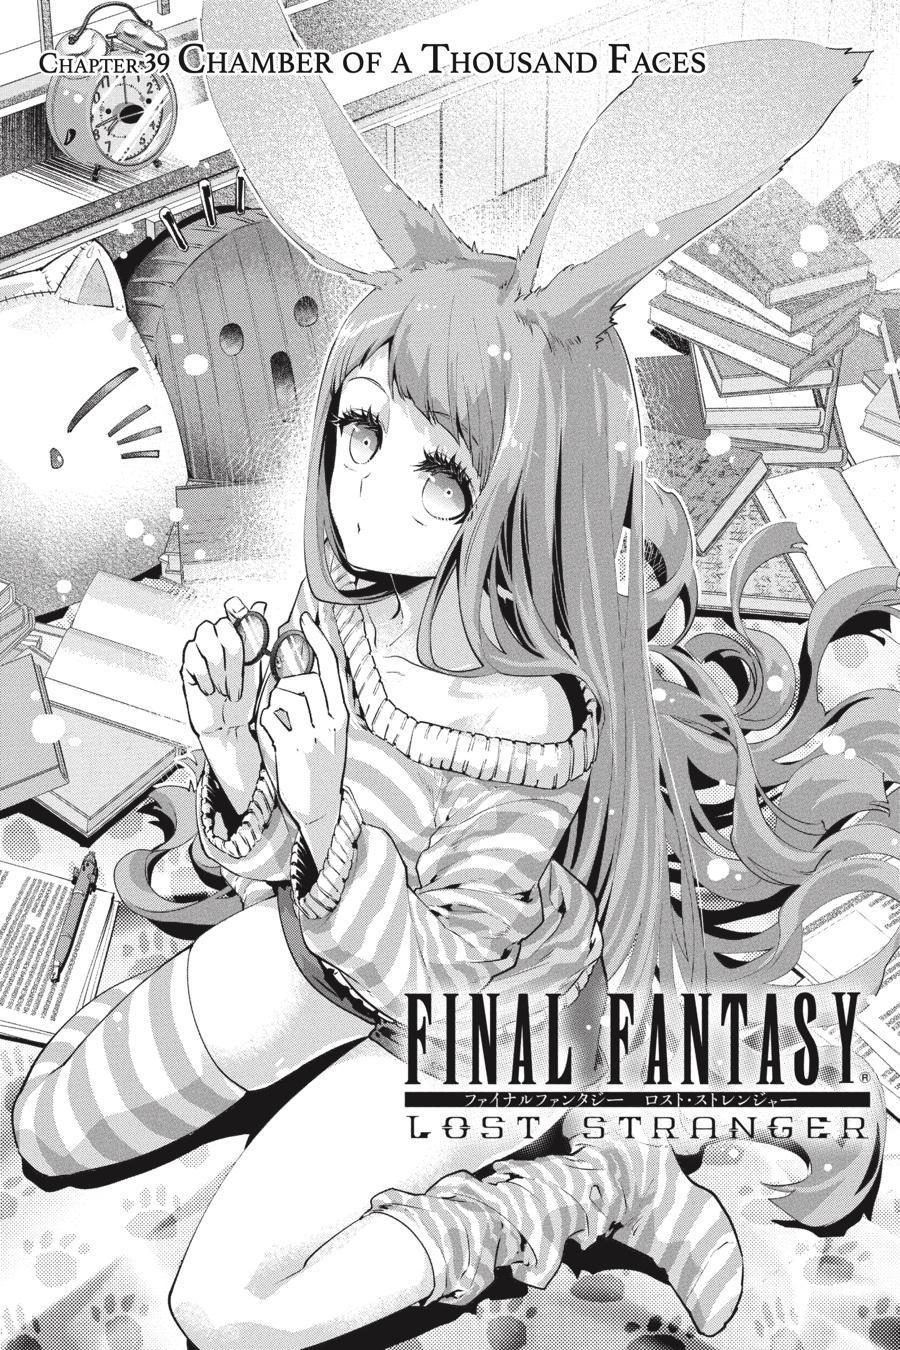 Final Fantasy Lost Stranger Ch 39 Page 1 Mangago